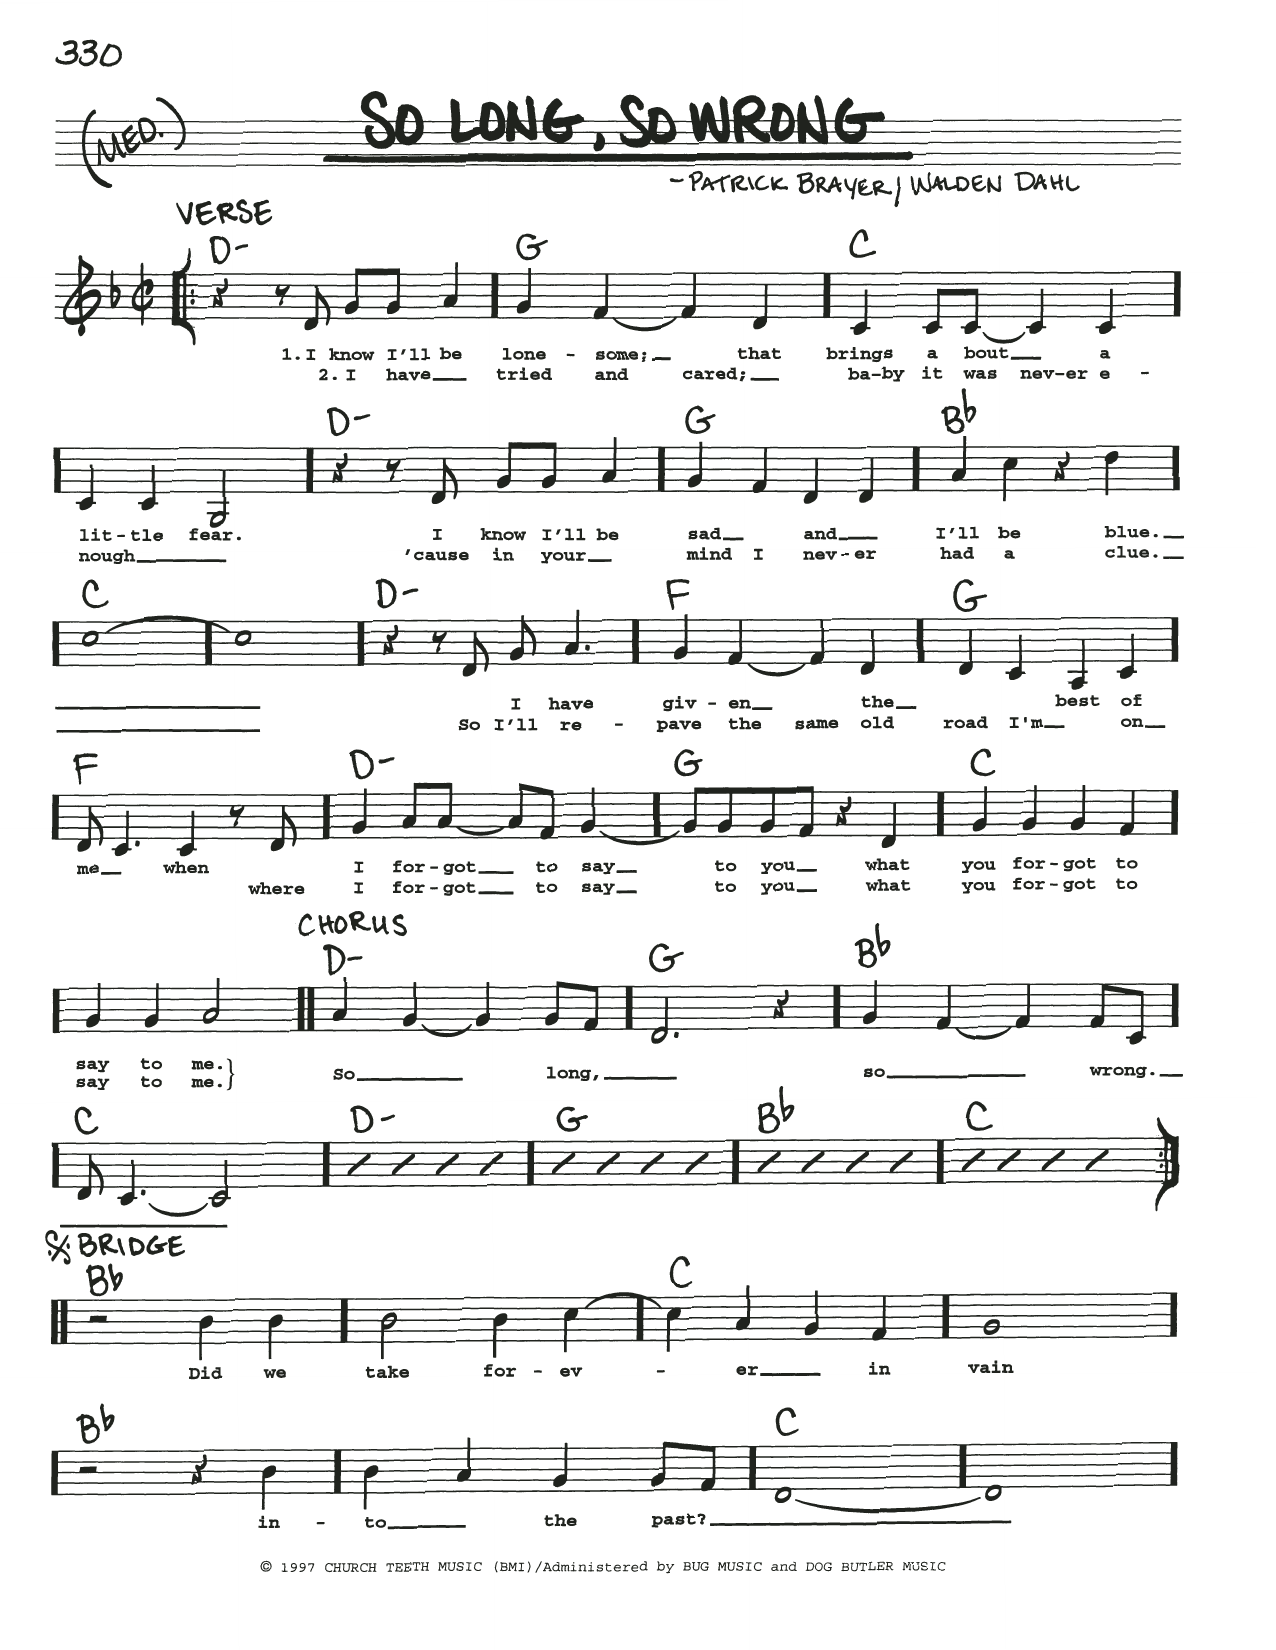 Alison Krauss So Long, So Wrong Sheet Music Notes & Chords for Real Book – Melody, Lyrics & Chords - Download or Print PDF